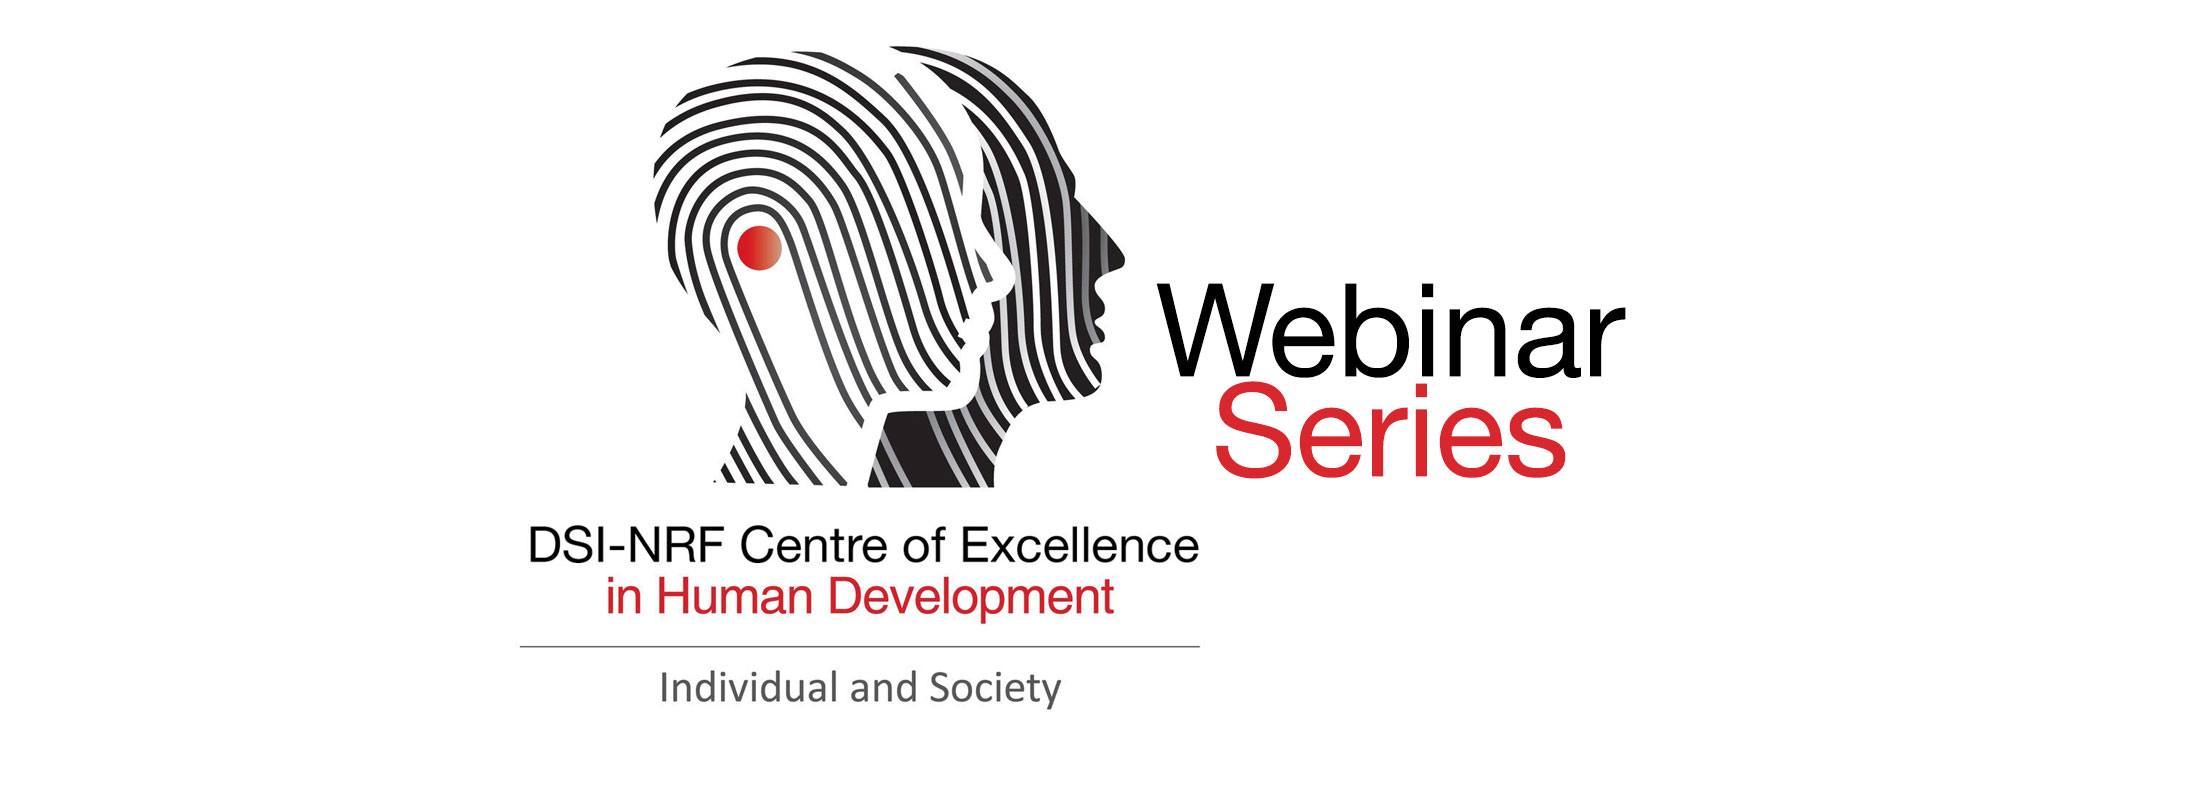 DSI-NRF Centre of Excellence in Human Development Webinar Series